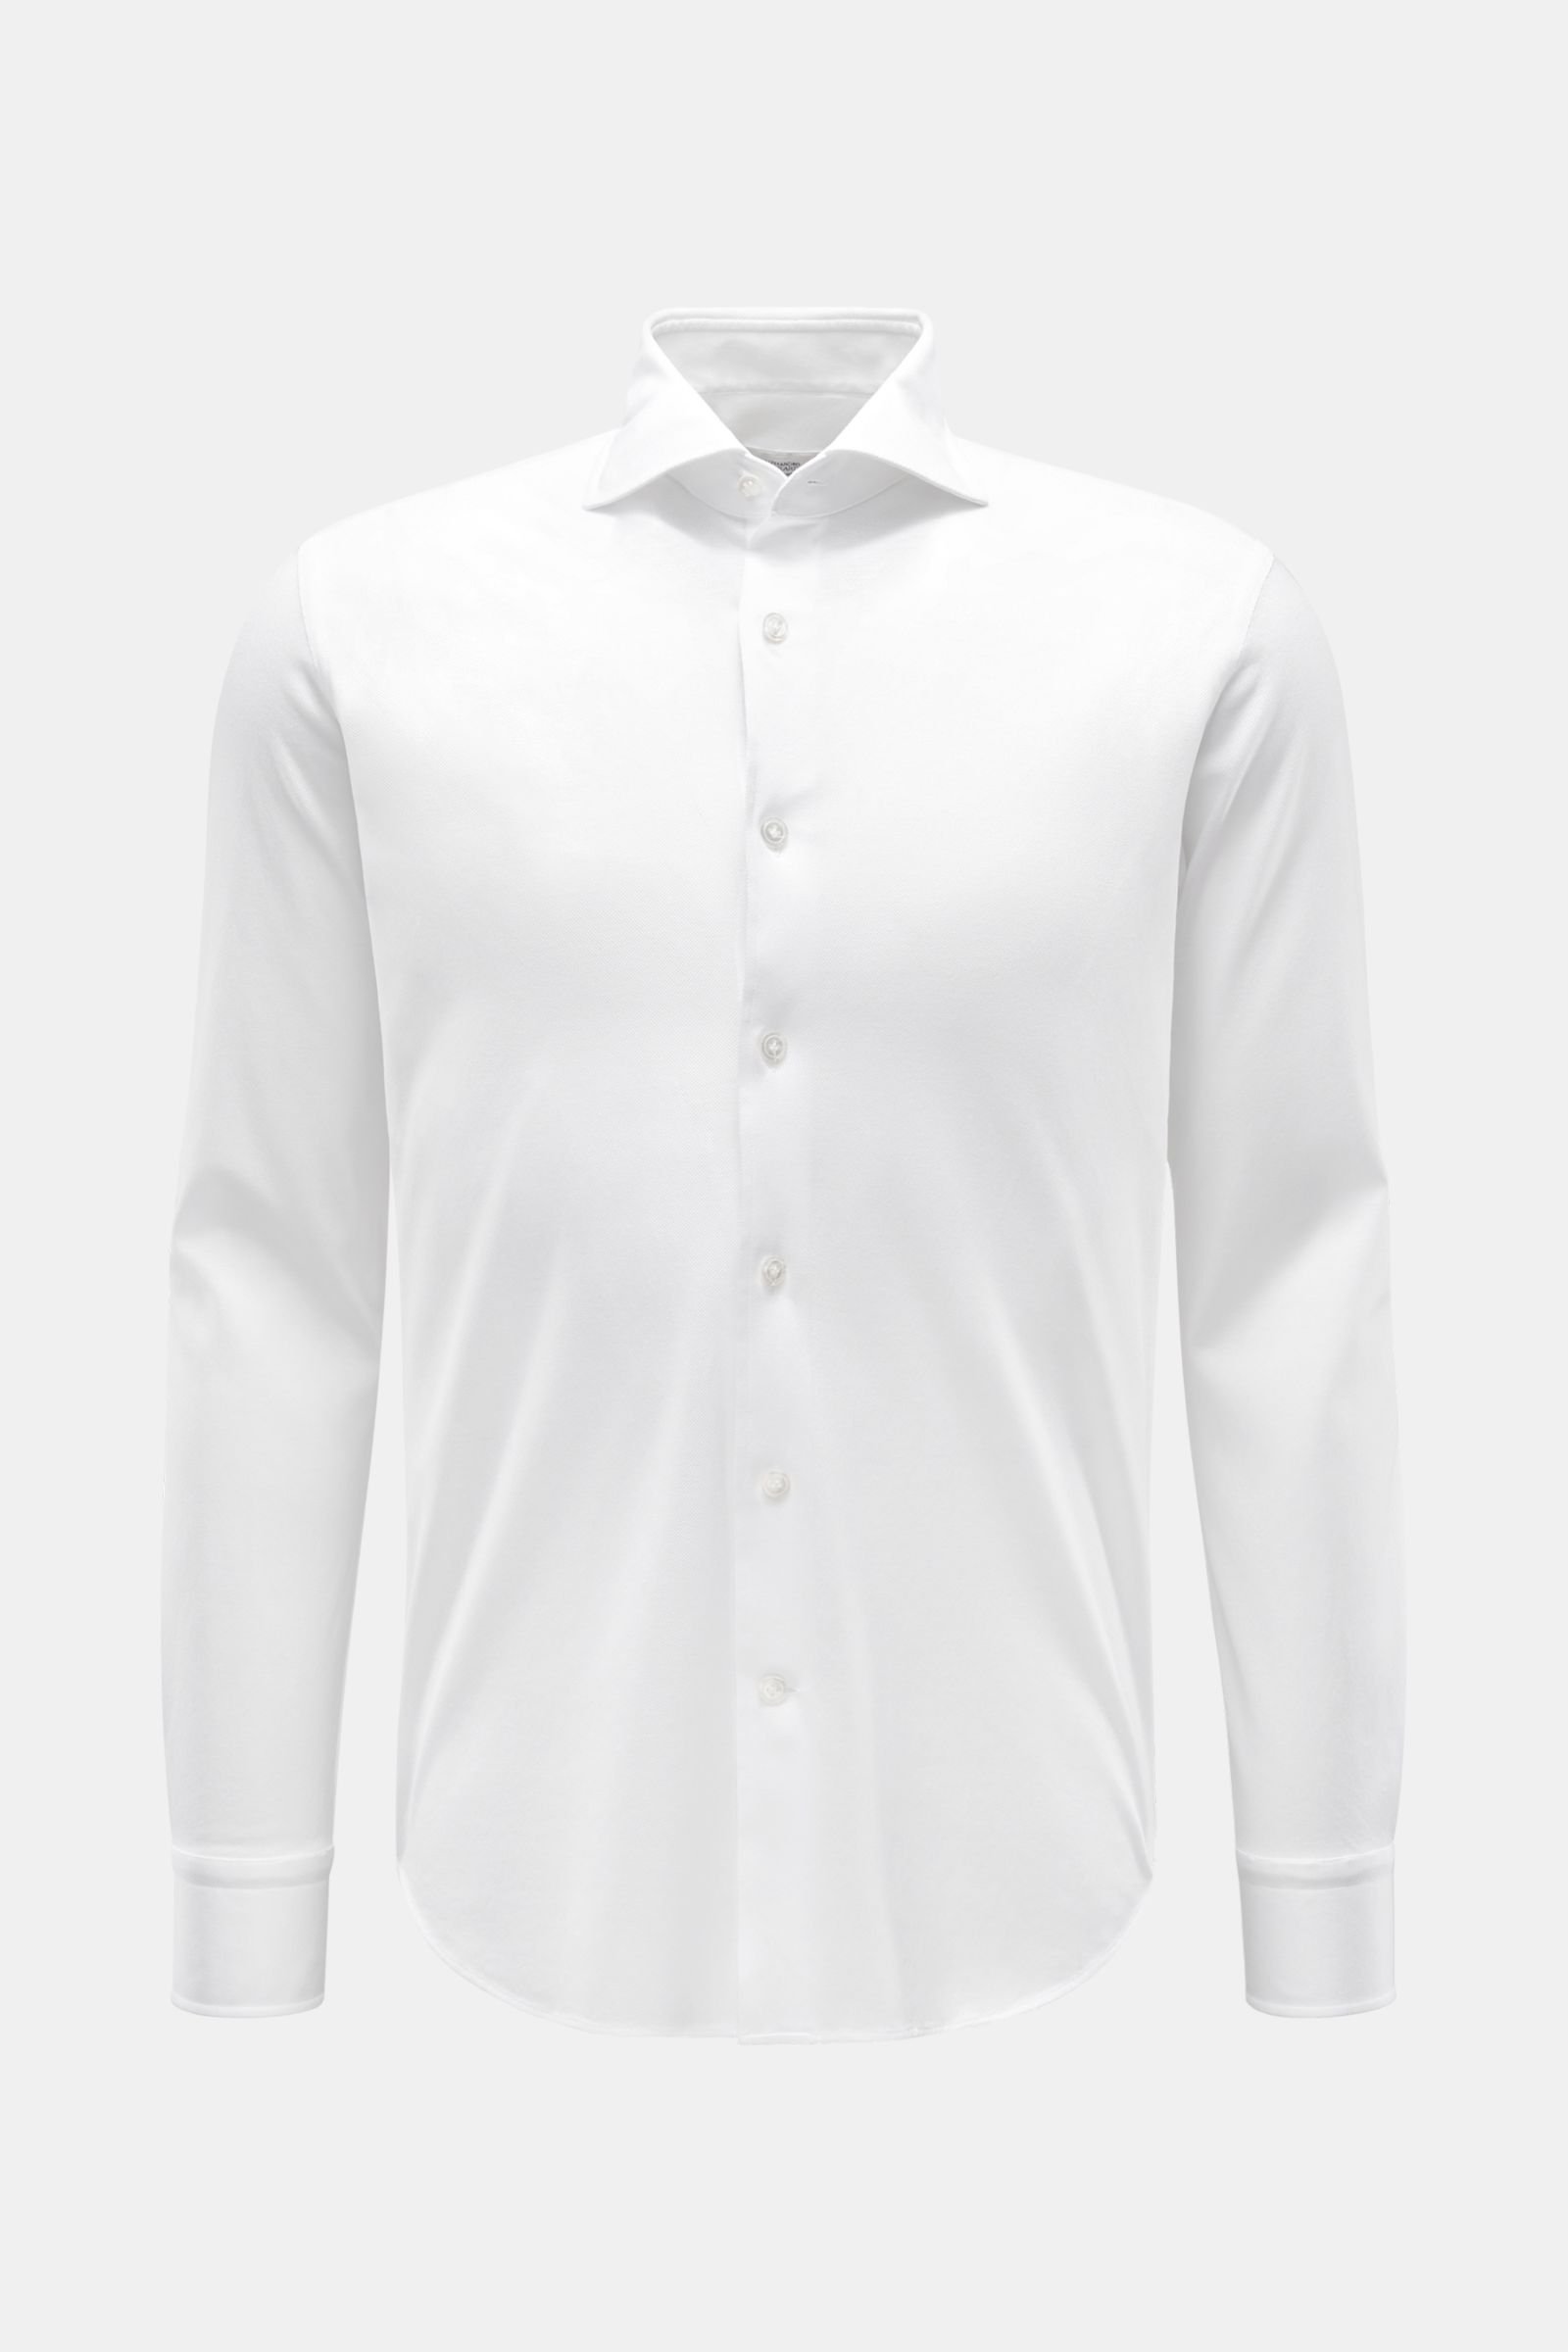 Jersey shirt shark collar white